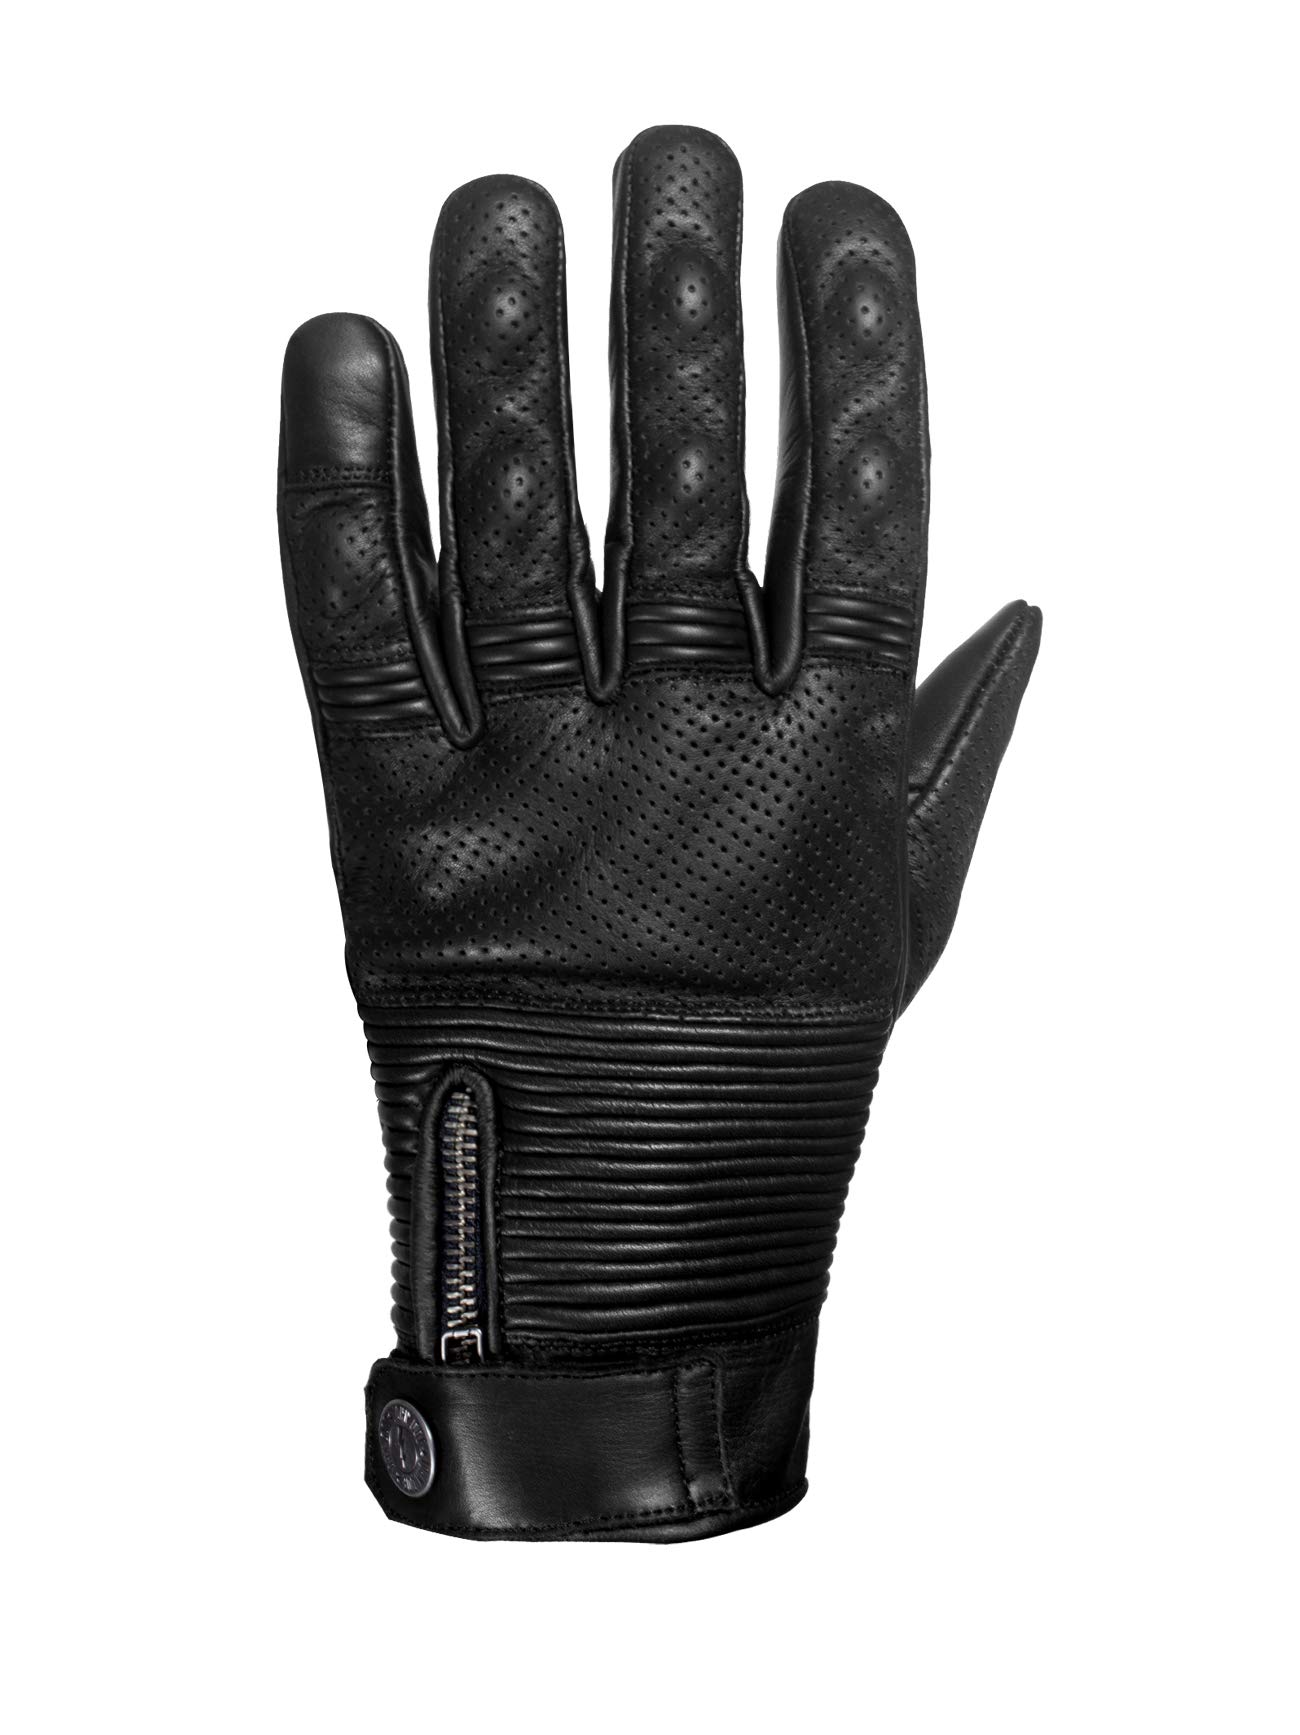 John Doe Motorrad Handschuh | Innenseite | Handschuh aus Rindsleder | Atmungsaktiv, rush black, xxl, JDG7019-2XL von John Doe